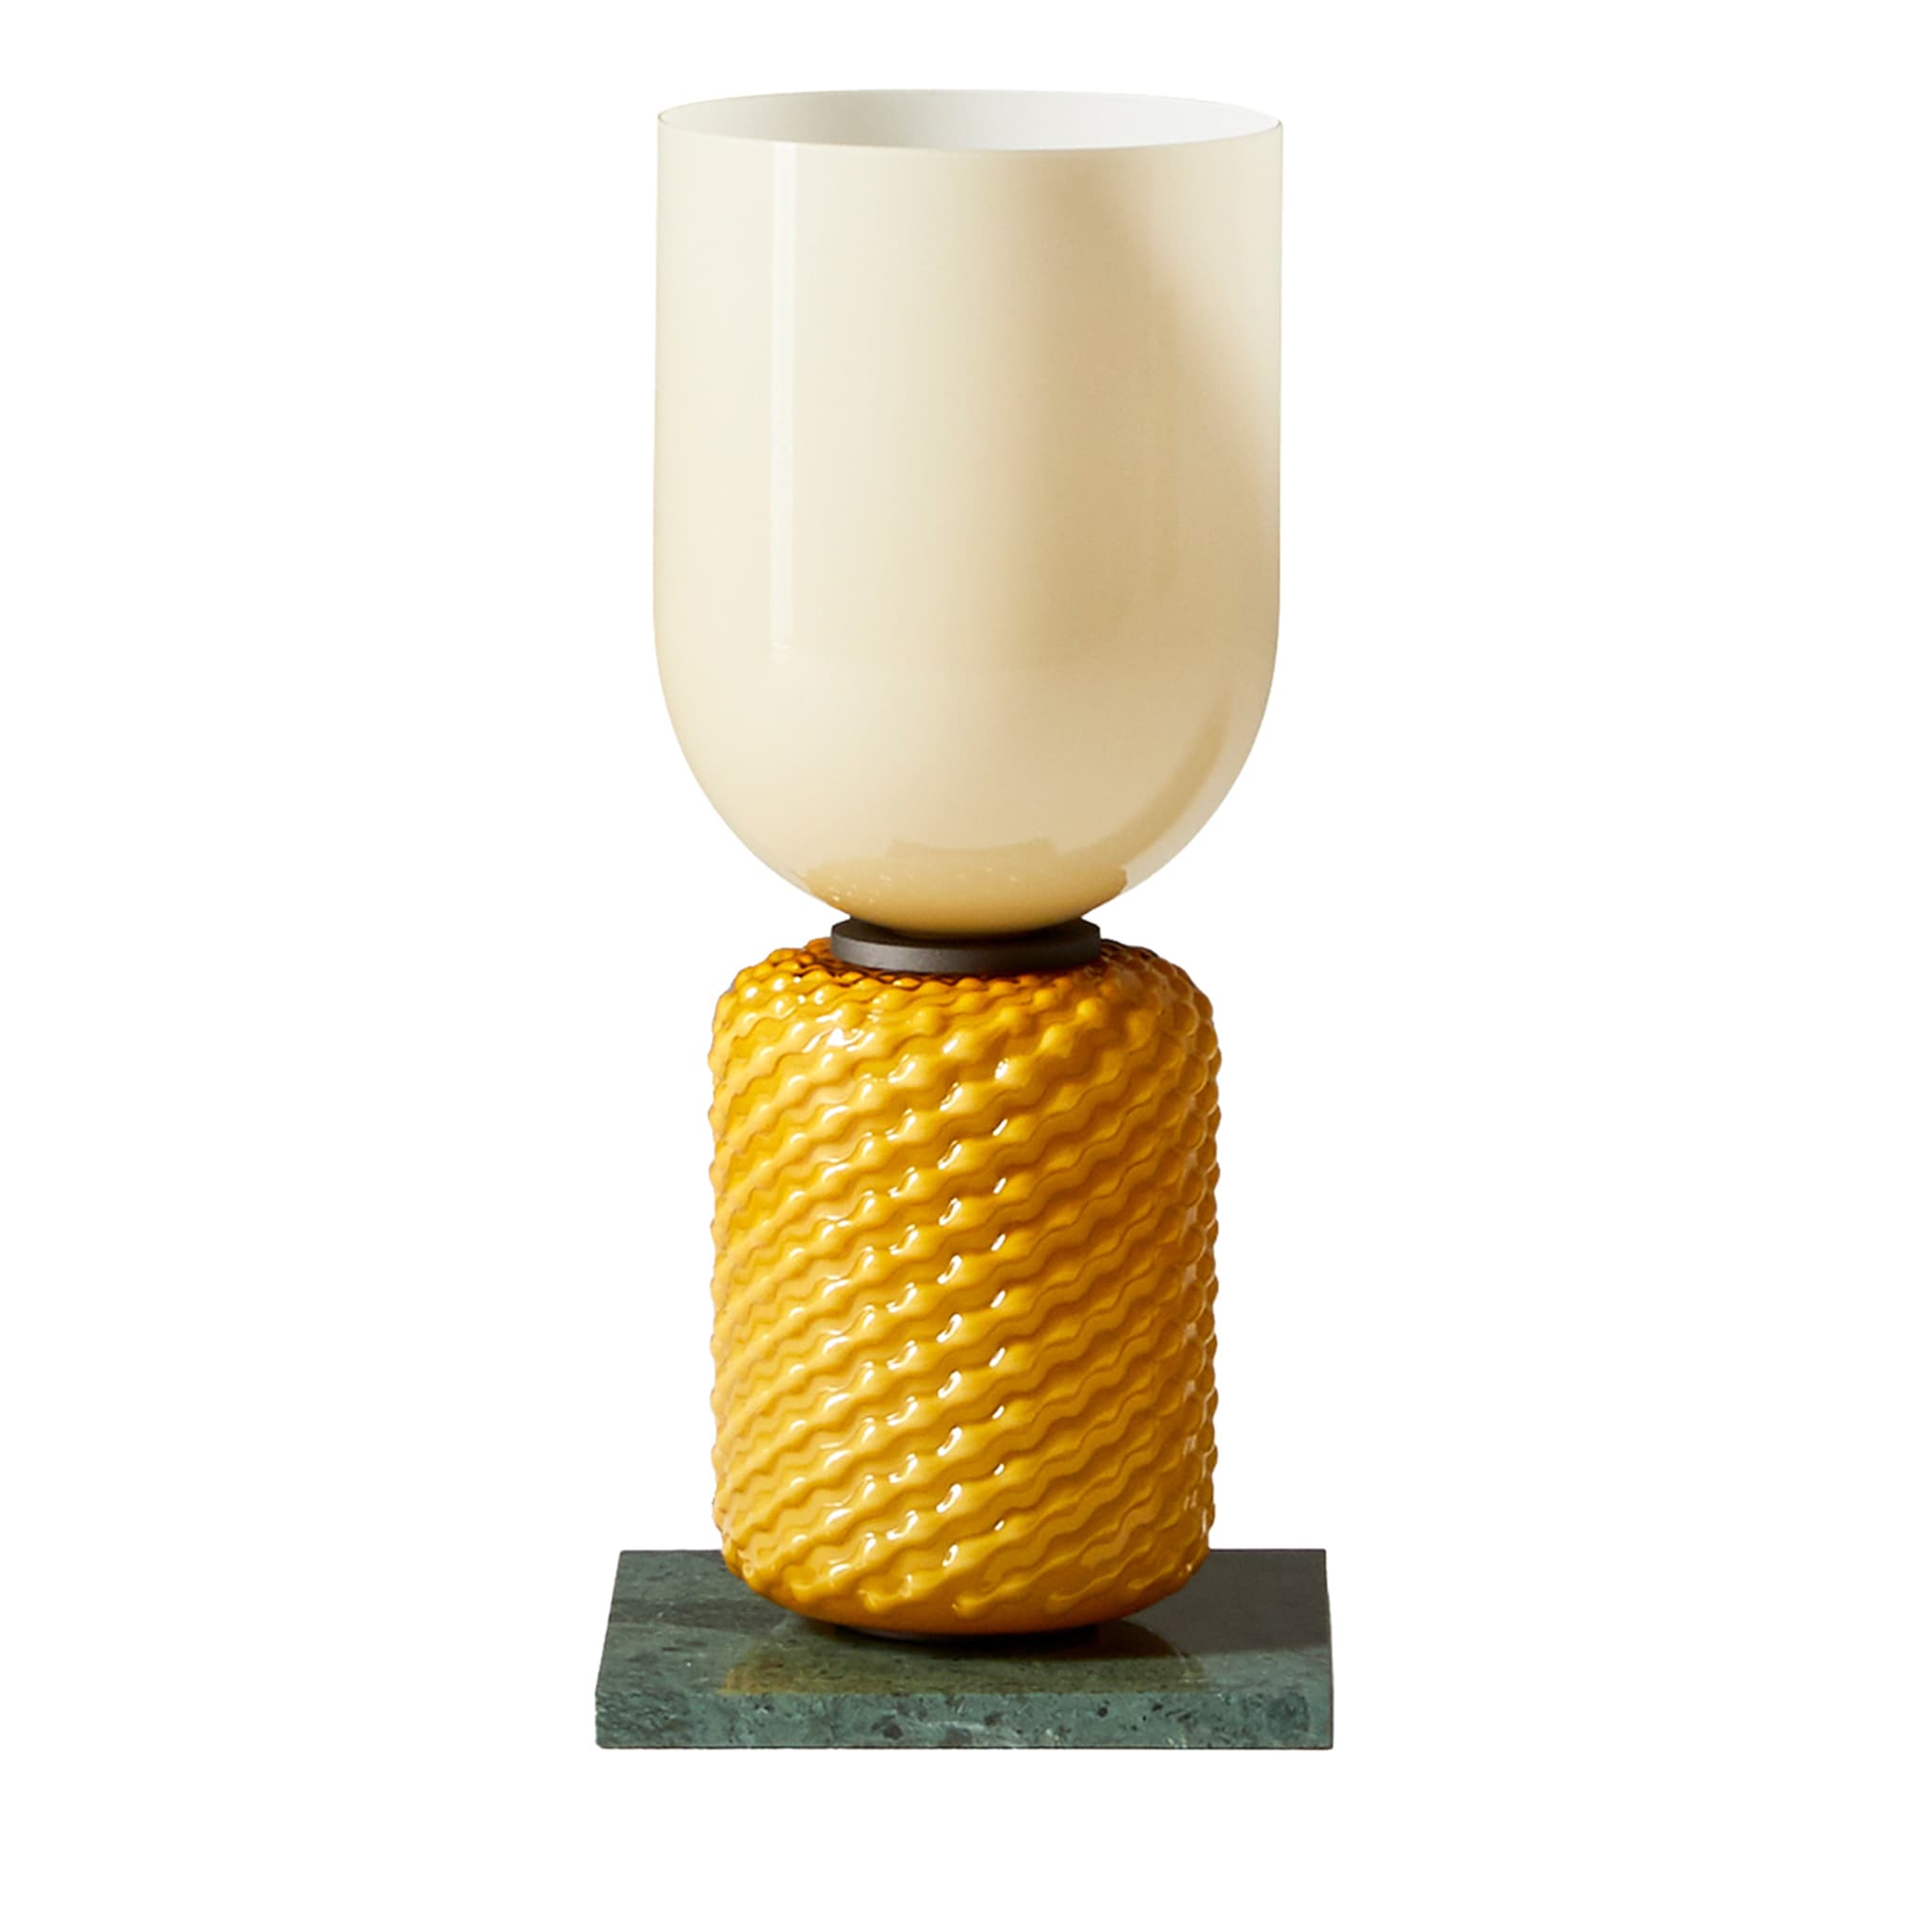 Ficupala Table Lamp #2 - Main view